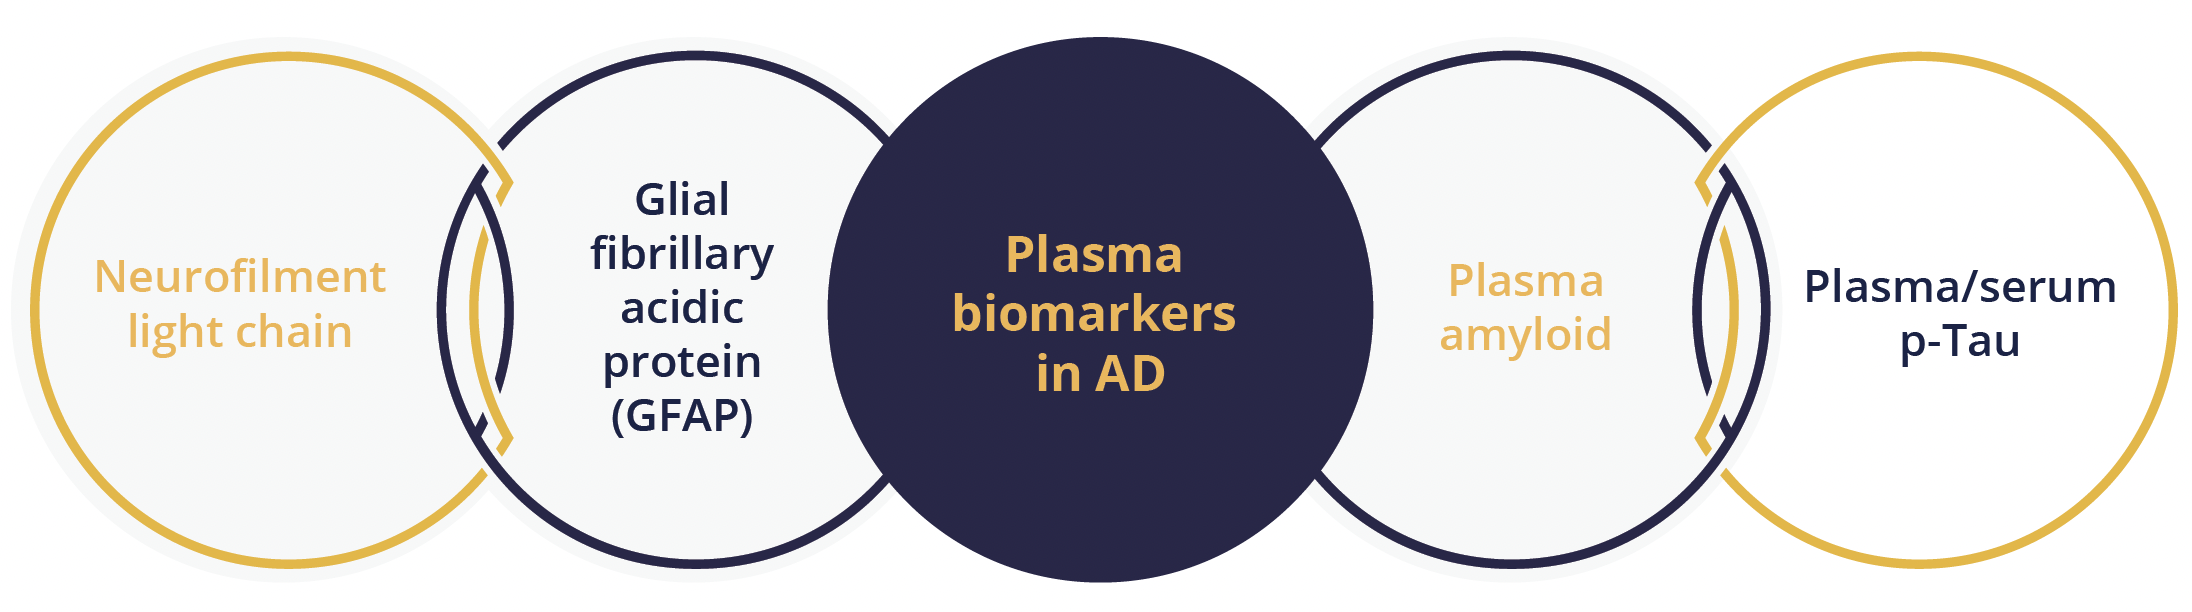 4 plasma biomarkers in AD